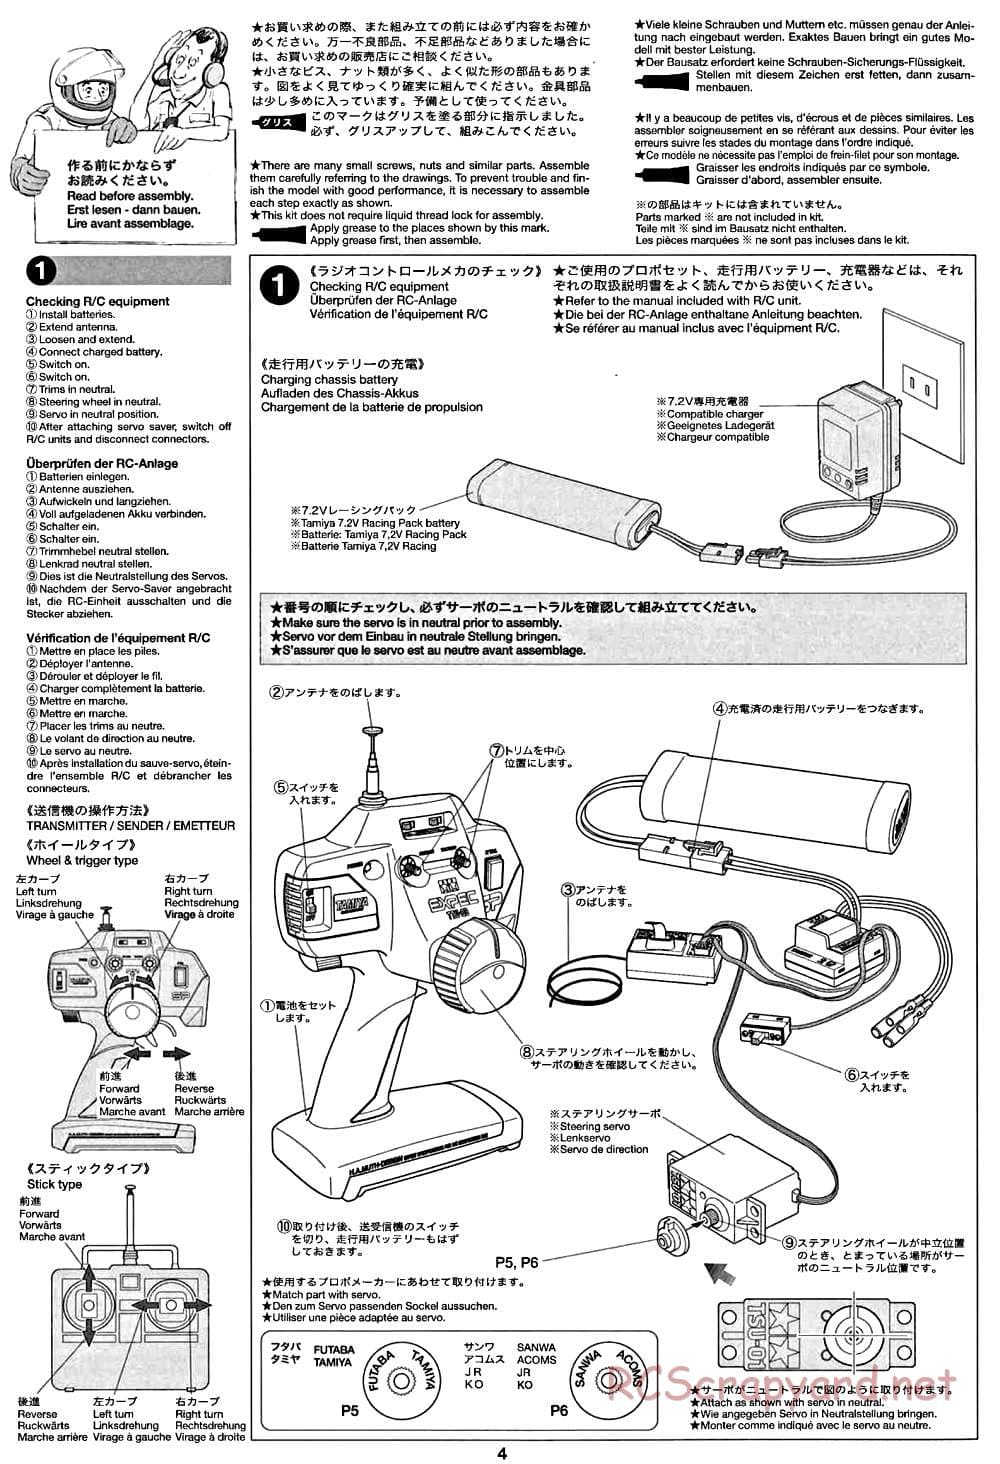 Tamiya - CW-01 Chassis - Manual - Page 4